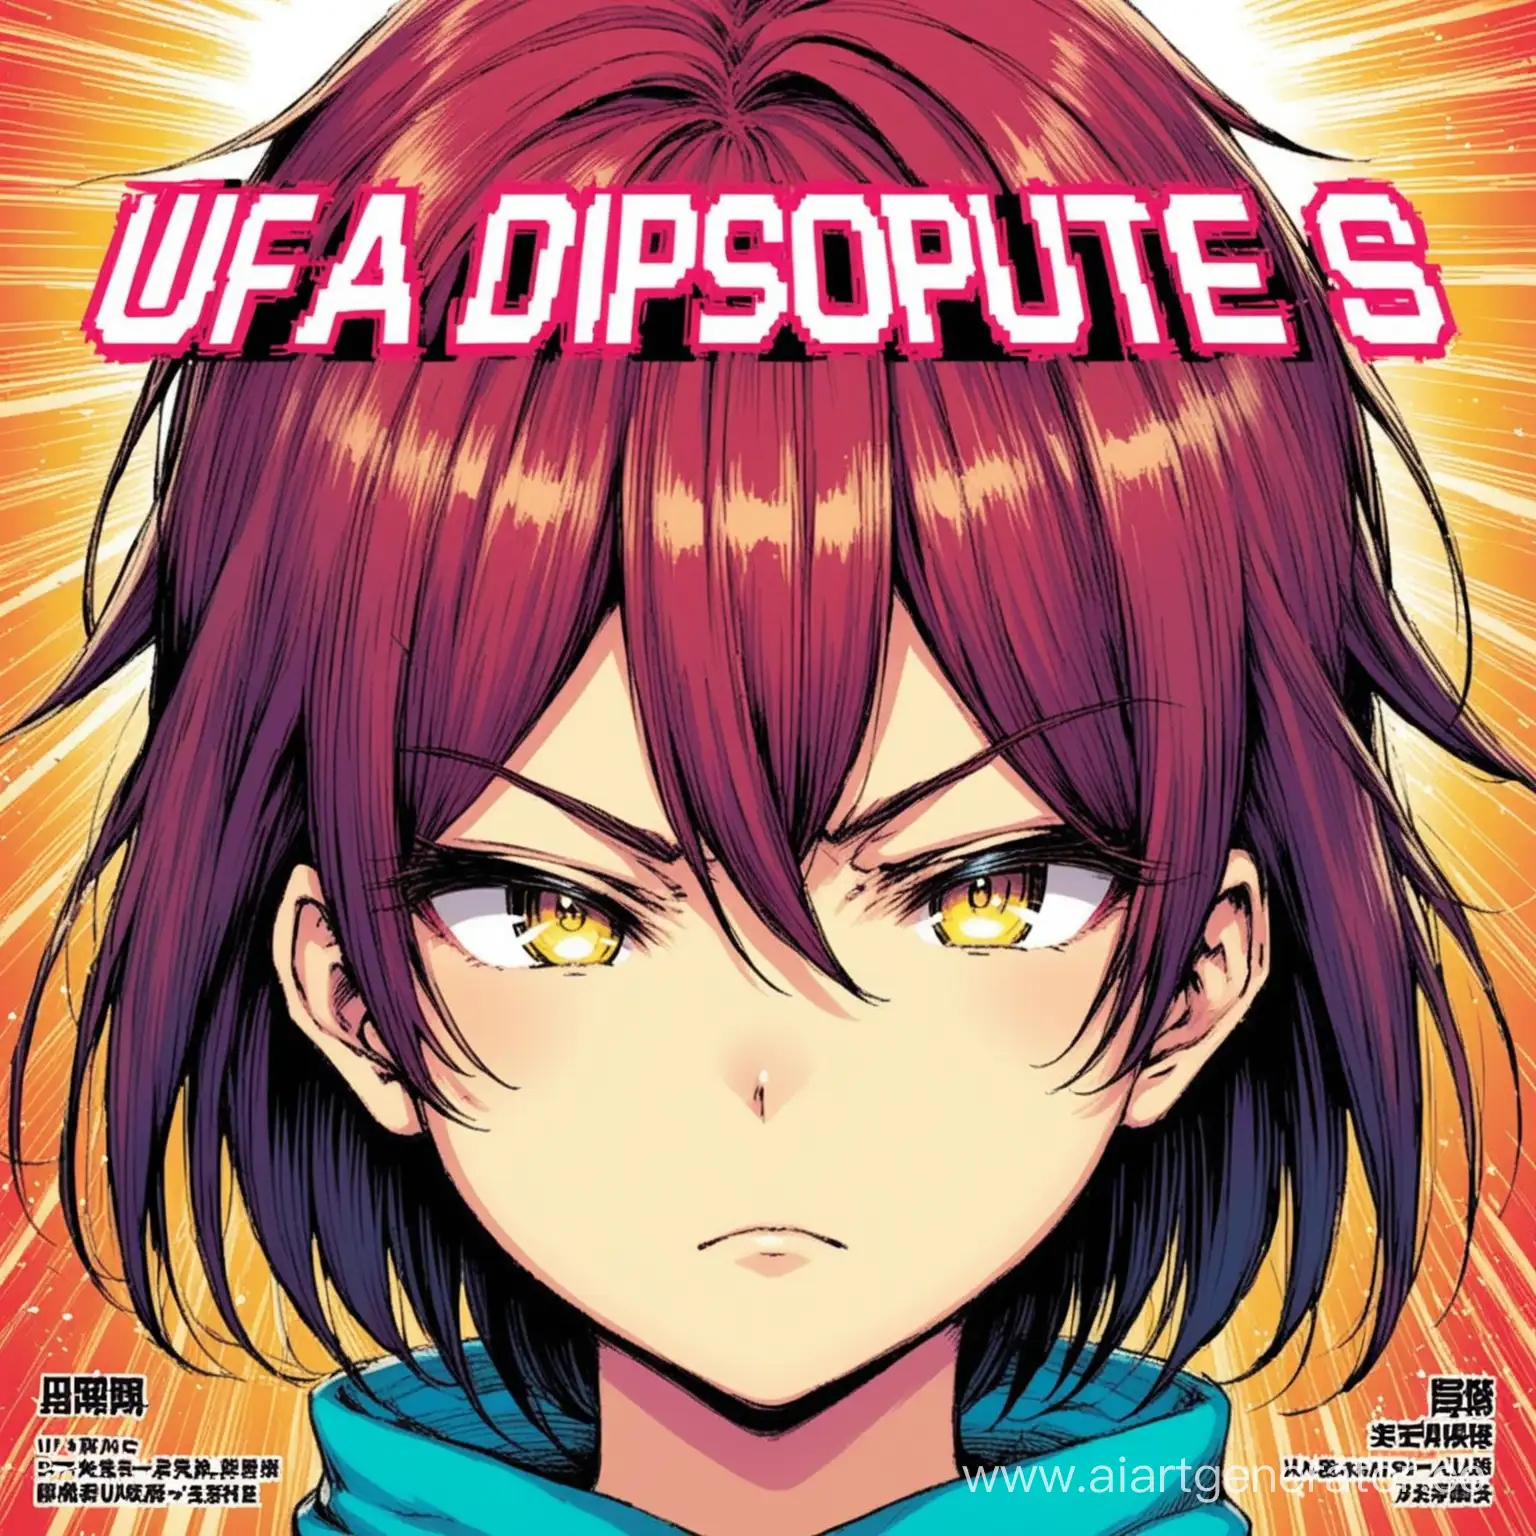 Manga-Cover-Dynamic-Ufa-Disputes-Characters-Clash-in-Artistic-Showdown